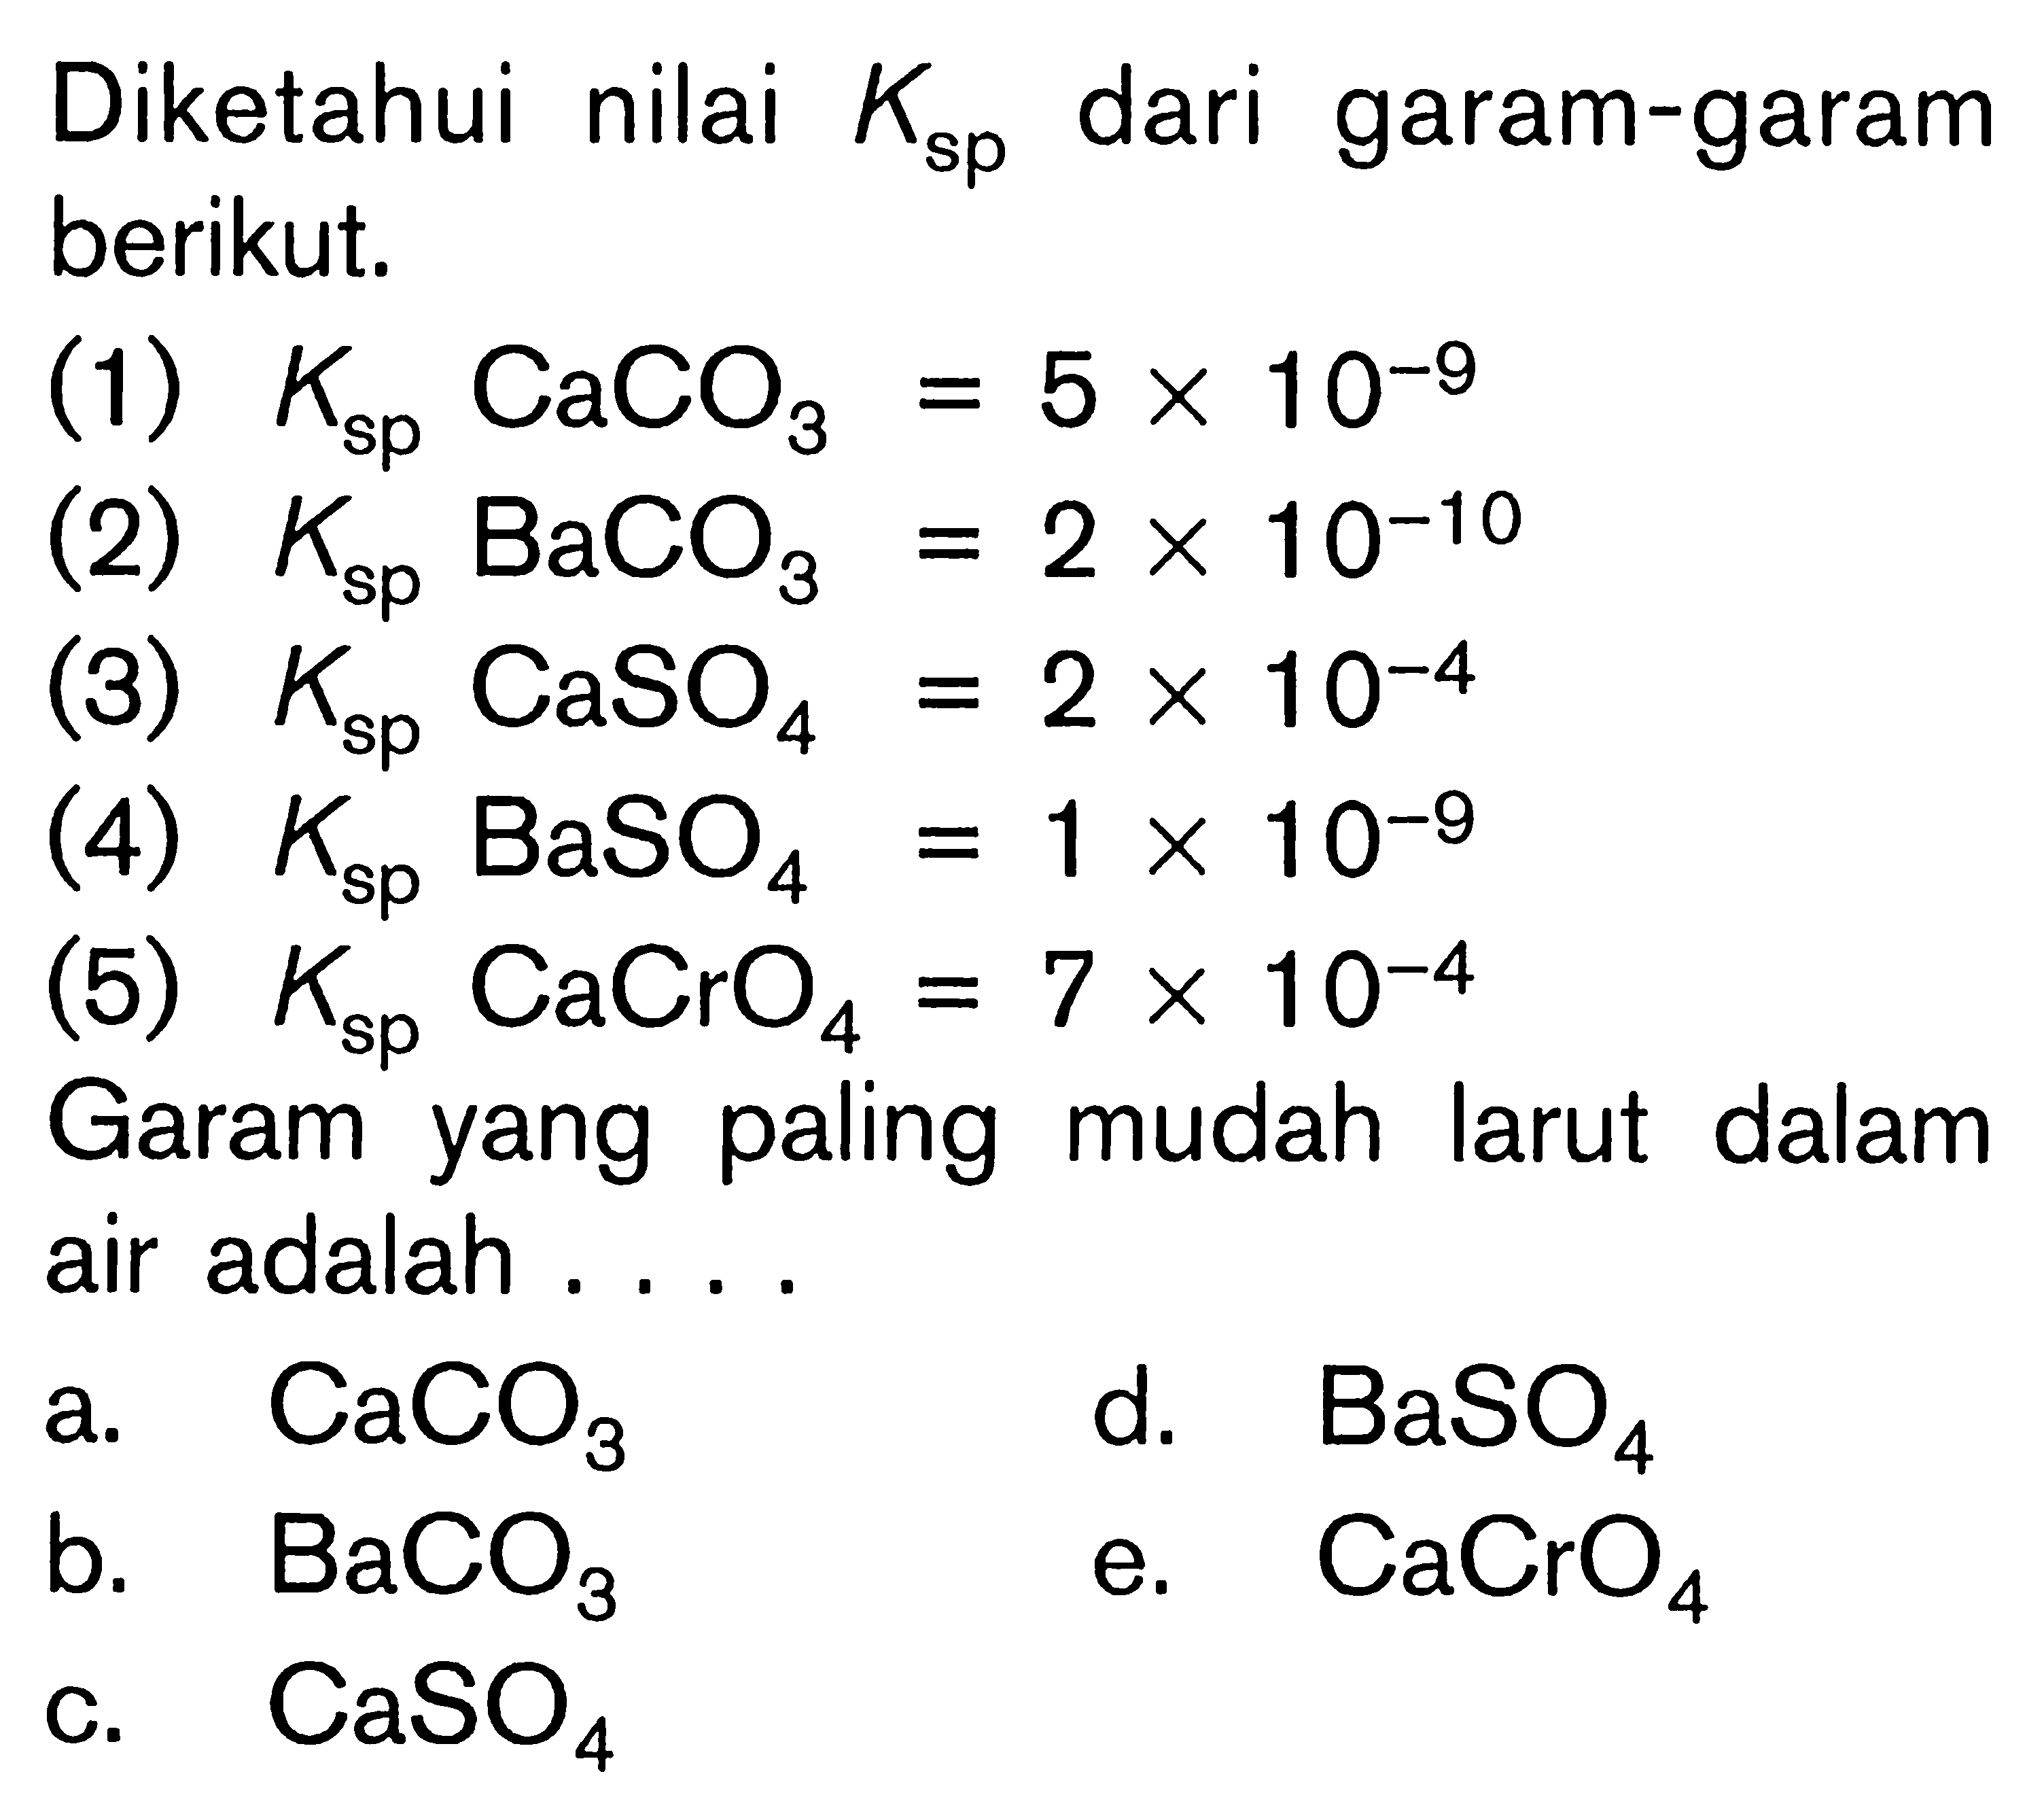 Diketahui nilai Ksp dari garam-garam berikut. (1) Ksp CaCO3=5 x 10^-9 (2) Ksp BaCO3=2 x 10^-10 (3) Ksp CaSO4=2 x 10^-4 (4) Ksp BaSO4=1 x 10^-9 (5) Ksp CaCrO4=7 x 10^-4 Garam yang paling mudah larut dalam air adalah ...